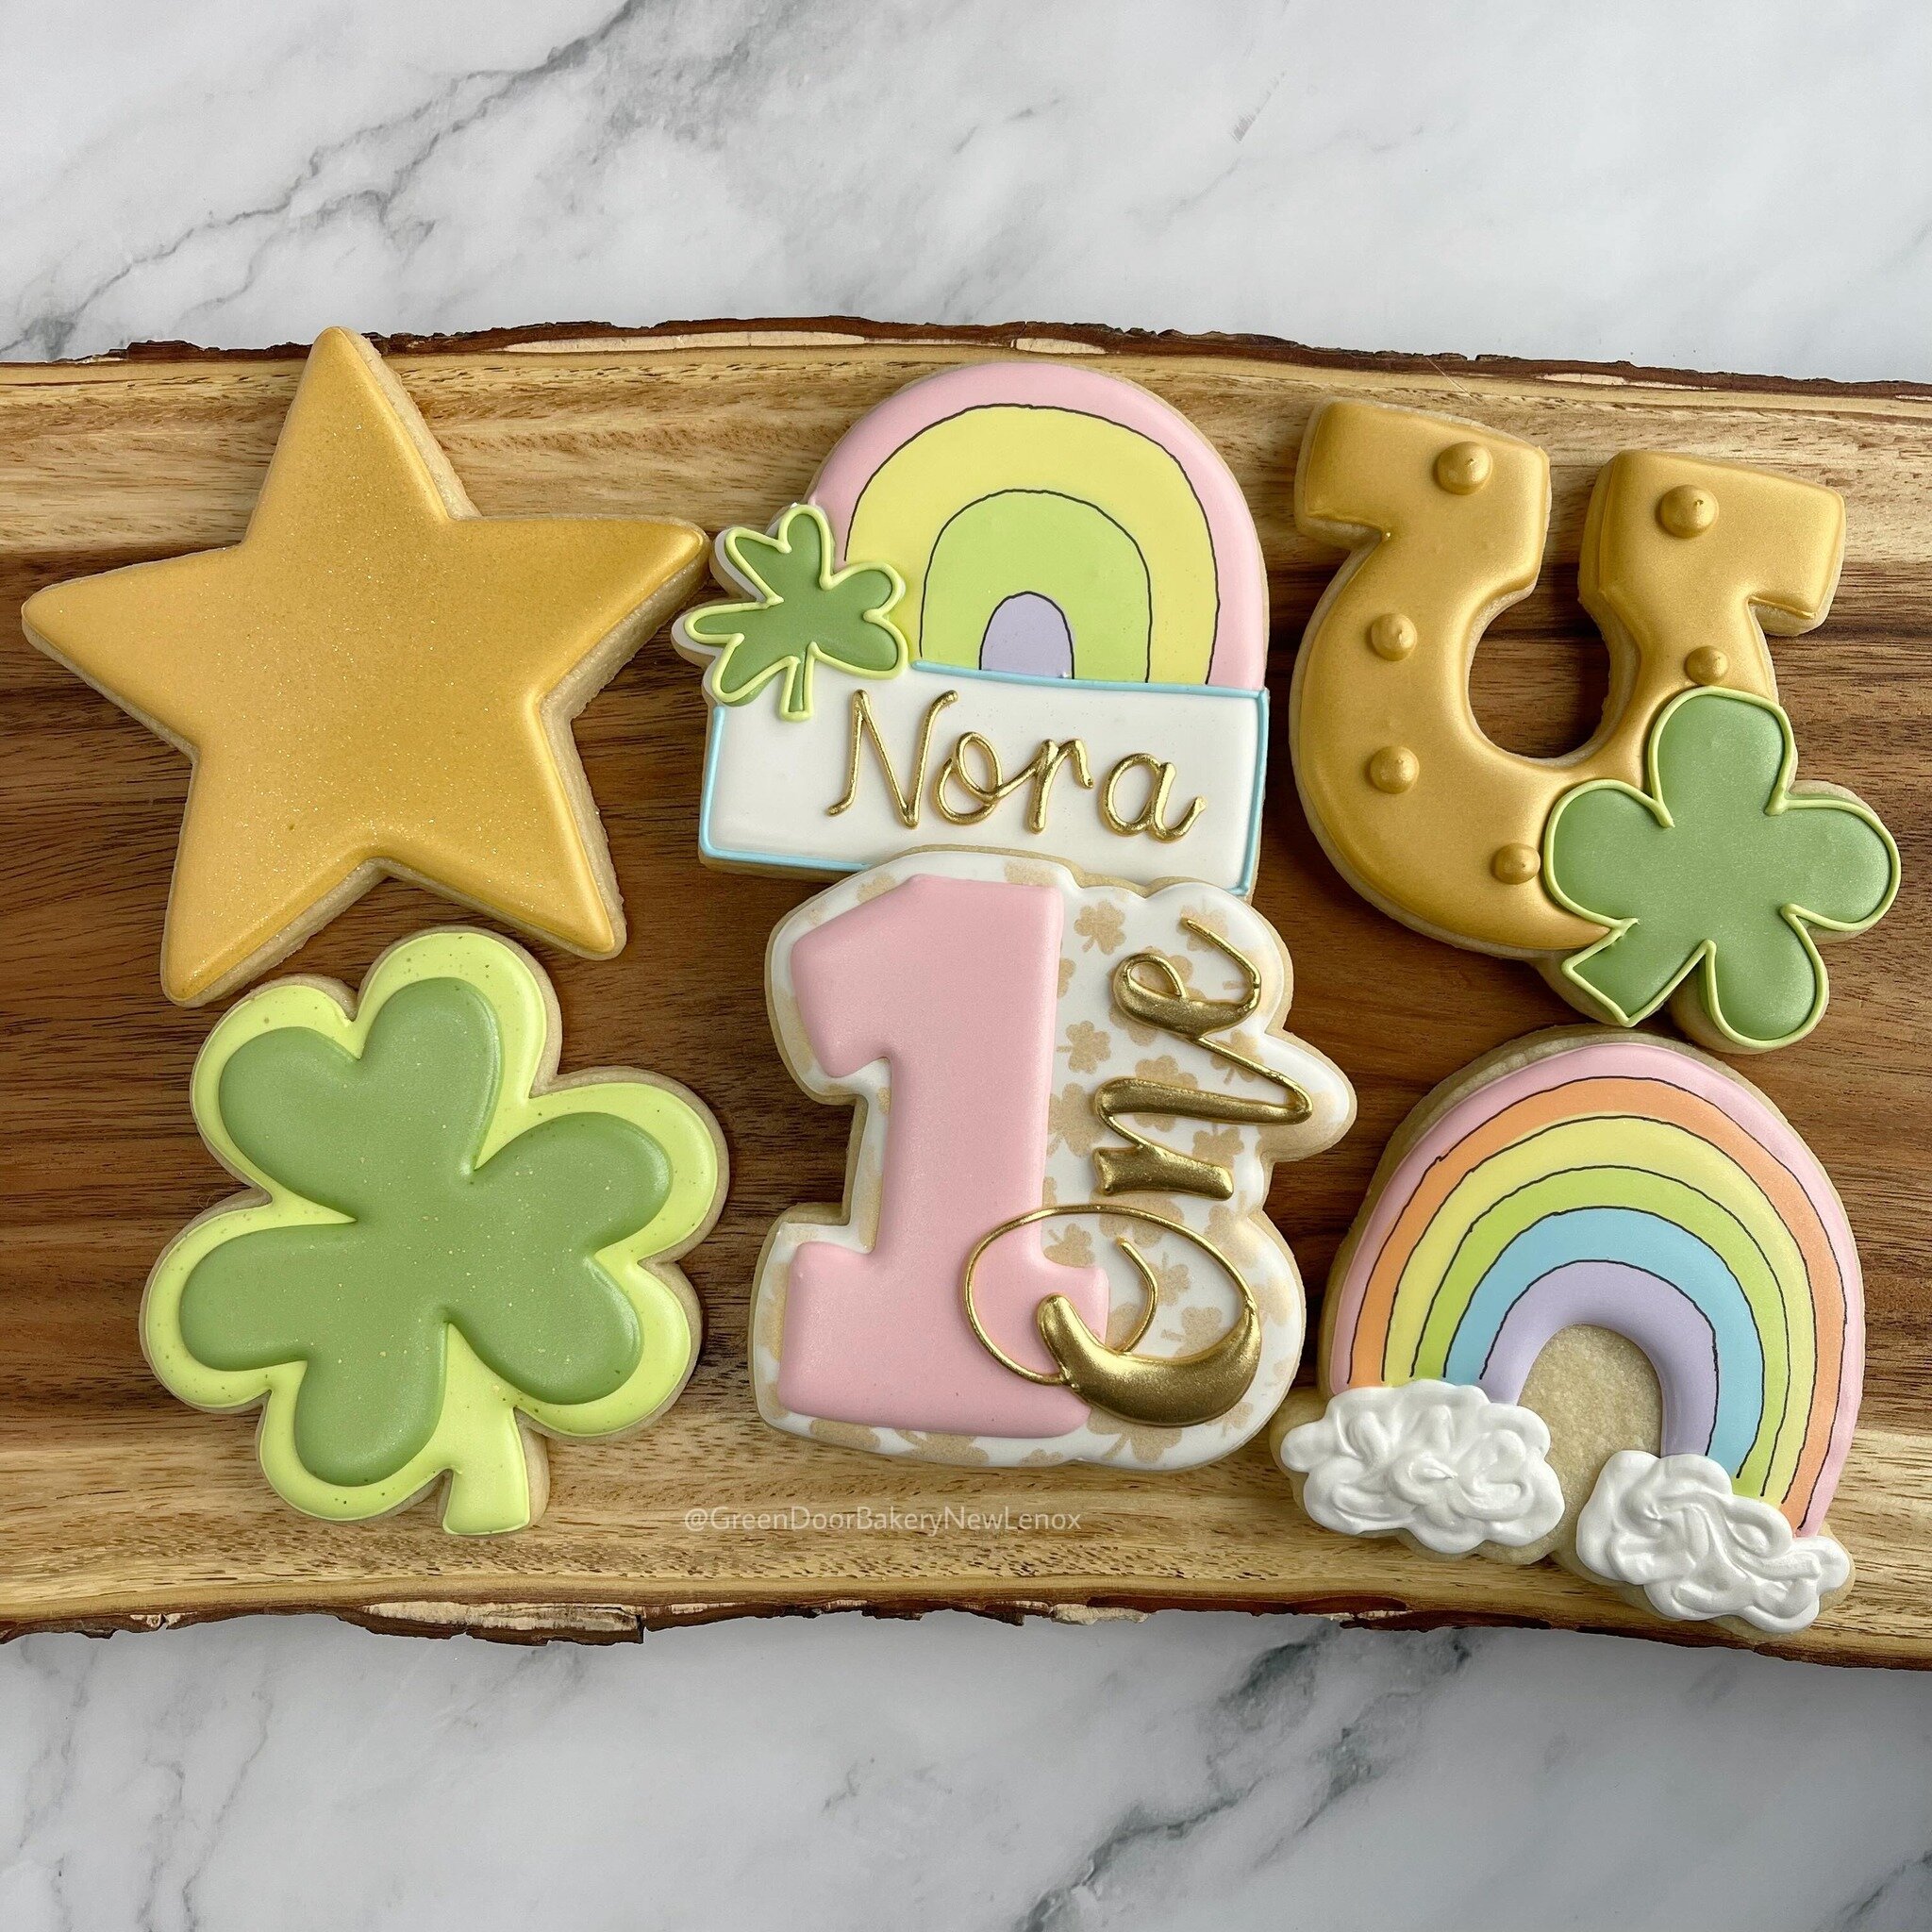 She&rsquo;s a lucky &ldquo;One&rdquo;! What a cute cute party theme! ☘️ 🌈 🎉 

#Greendoorbakerynewlenox #newlenox #newlenoxil #newlenoxillinois #illinois #instacookies #customcookies #sugarcookies #homebaker #cookies #yum #edibleart #luckyonecookies